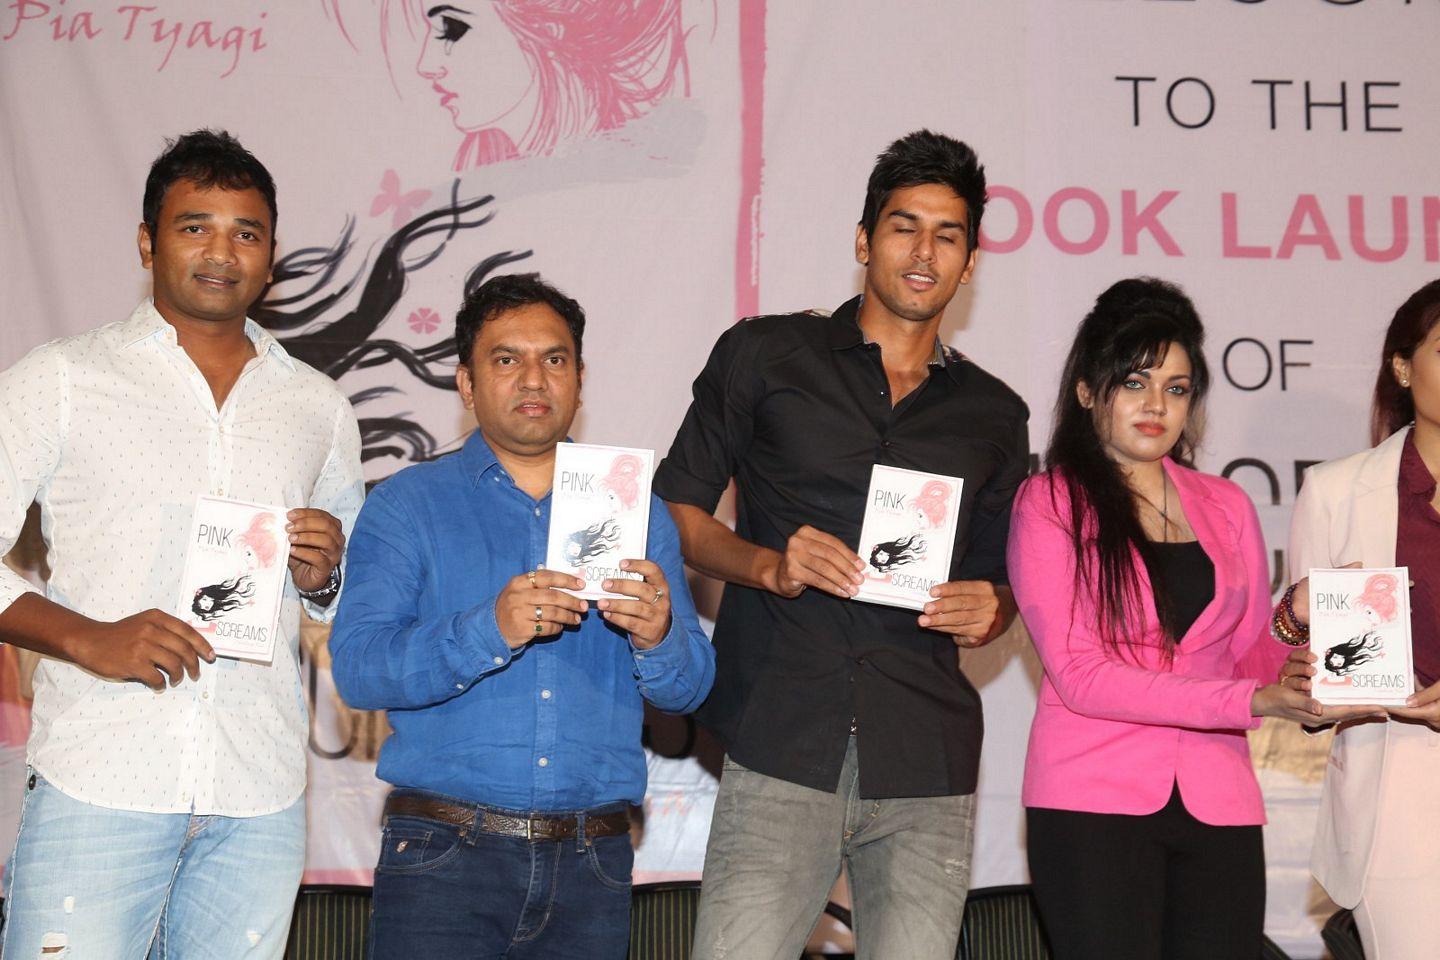  Pink Screams Book Launch Pics